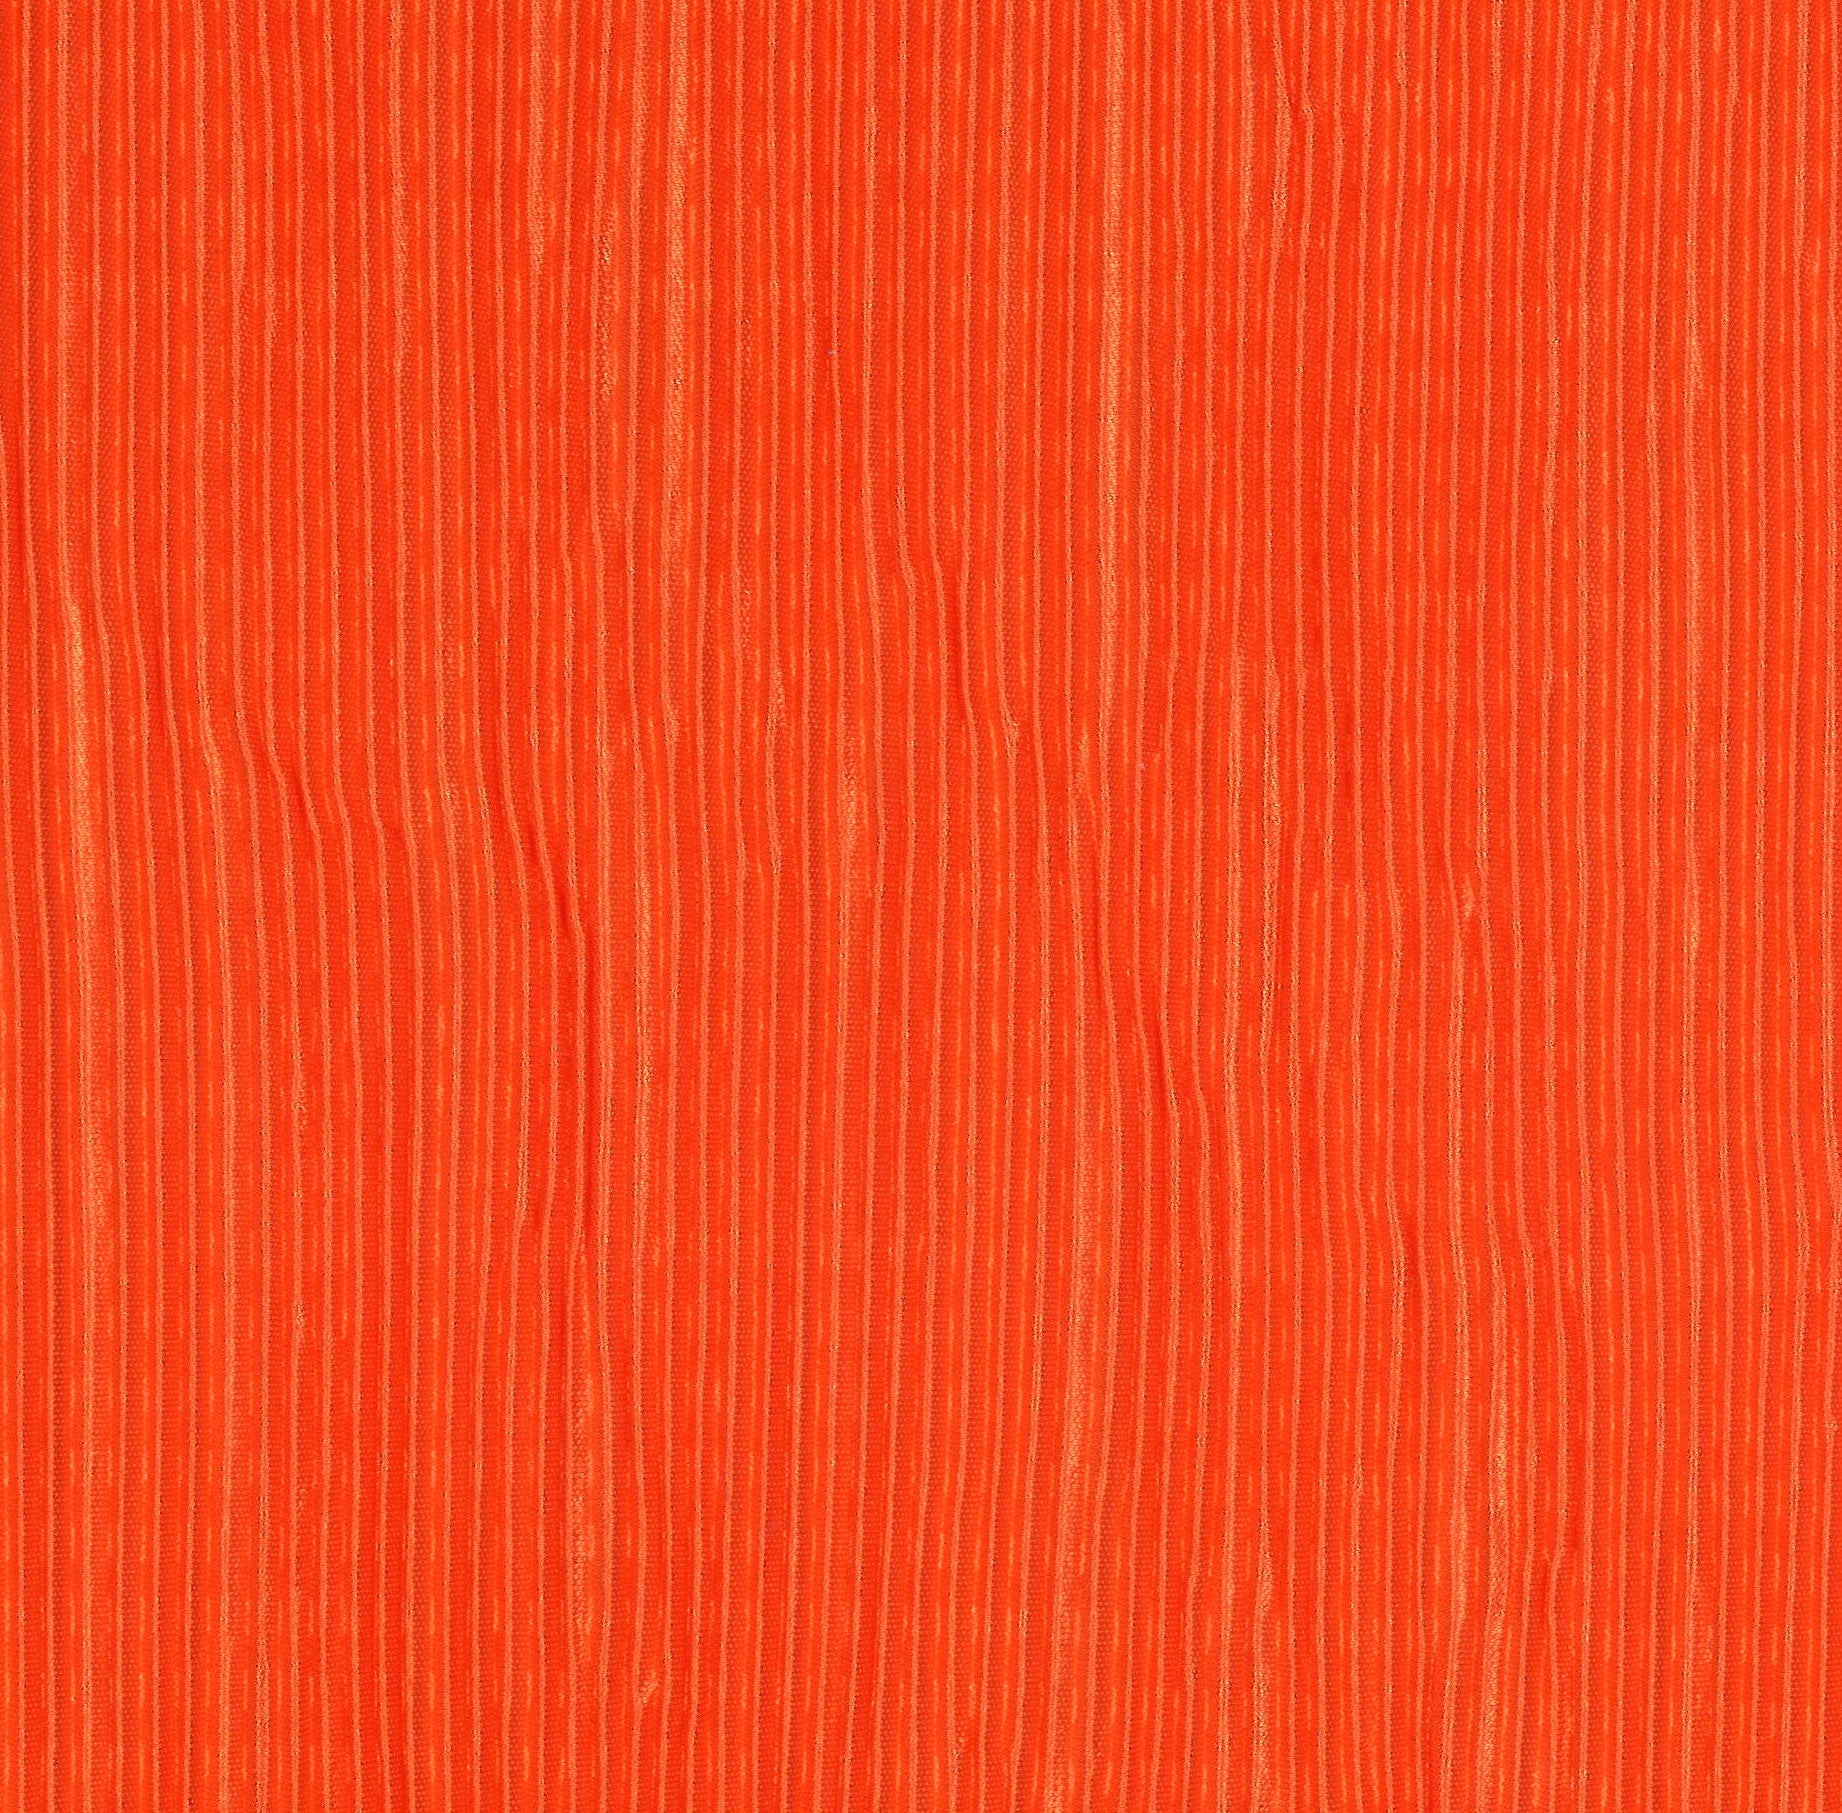 9761-01 Orange Polyester Pleat Plain Dyed 100% 180g/yd 56" knit orange plain dyed pleat polyester Solid Color, Pleat - knit fabric - woven fabric - fabric company - fabric wholesale - fabric b2b - fabric factory - high quality fabric - hong kong fabric - fabric hk - acetate fabric - cotton fabric - linen fabric - metallic fabric - nylon fabric - polyester fabric - spandex fabric - chun wing hing - cwh hk - fabric worldwide ship - 針織布 - 梳織布 - 布料公司- 布料批發 - 香港布料 - 秦榮興